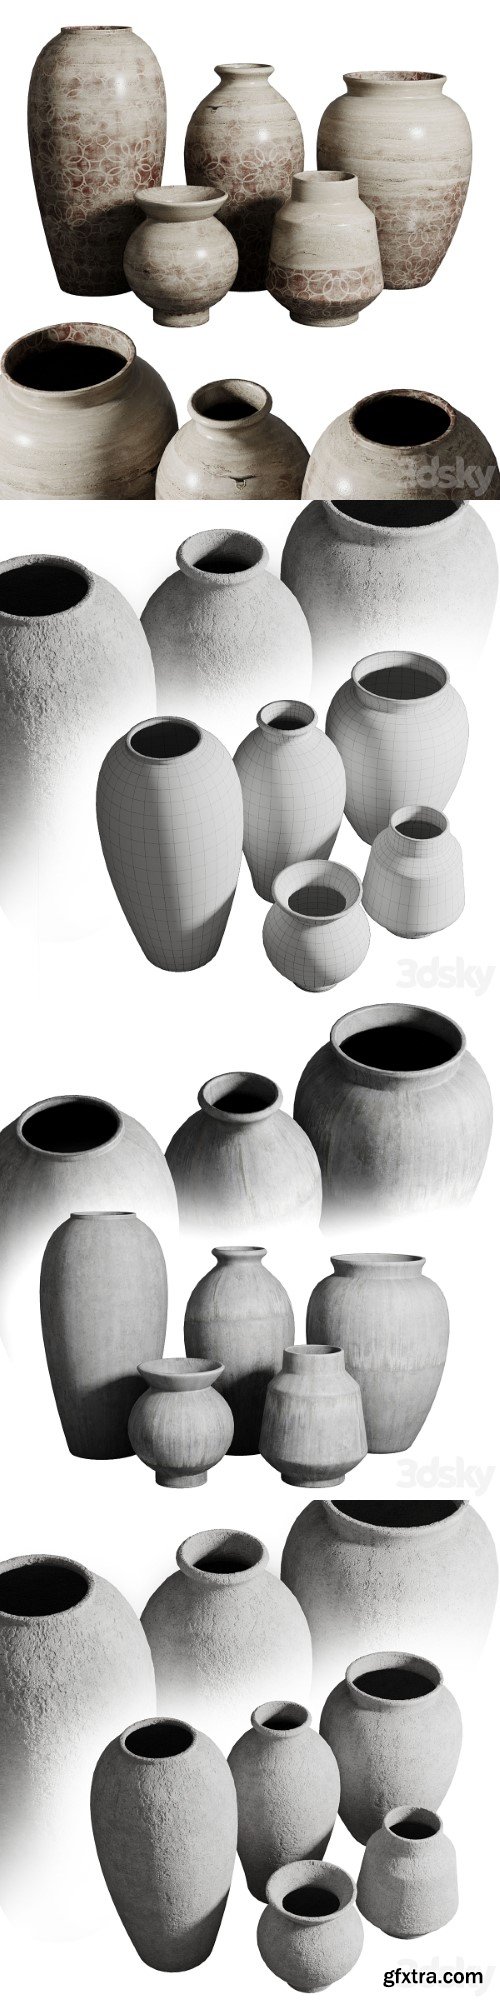 Old vase 3 material marble concrete plaster